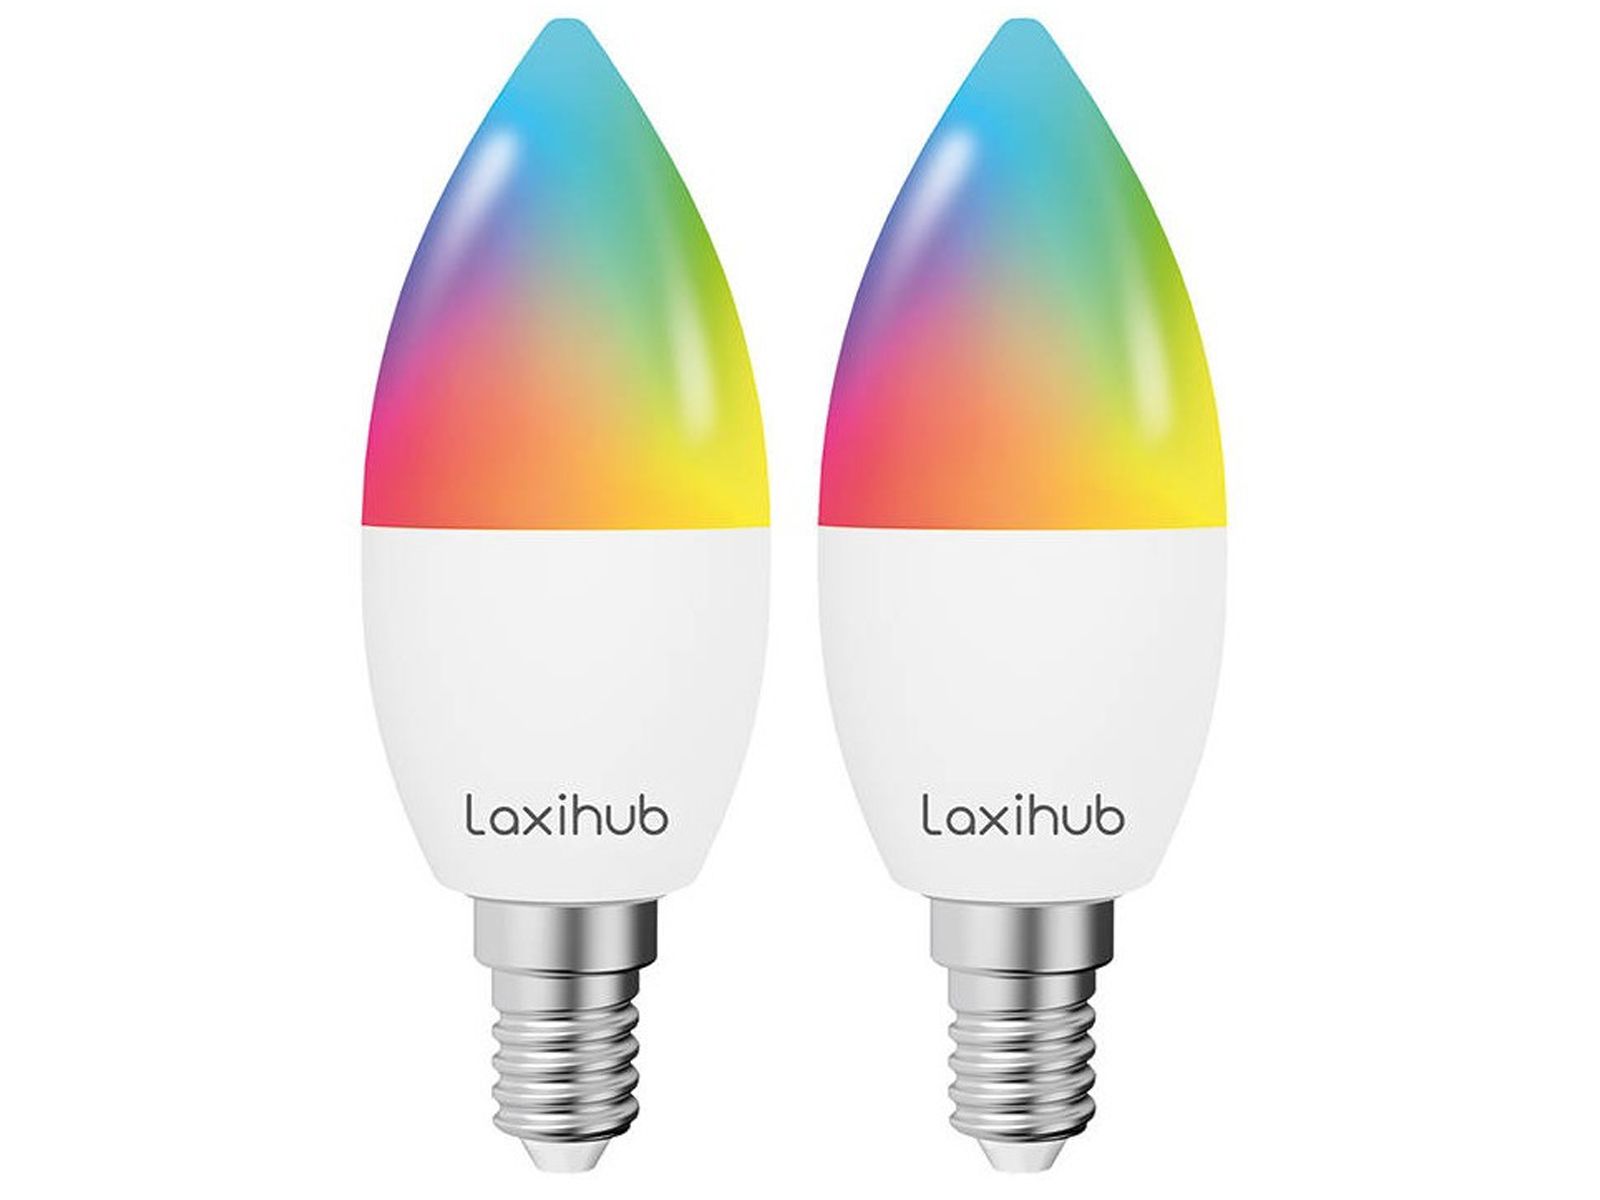 2x-laxihub-smart-lamp-multicolour-rgb-e14